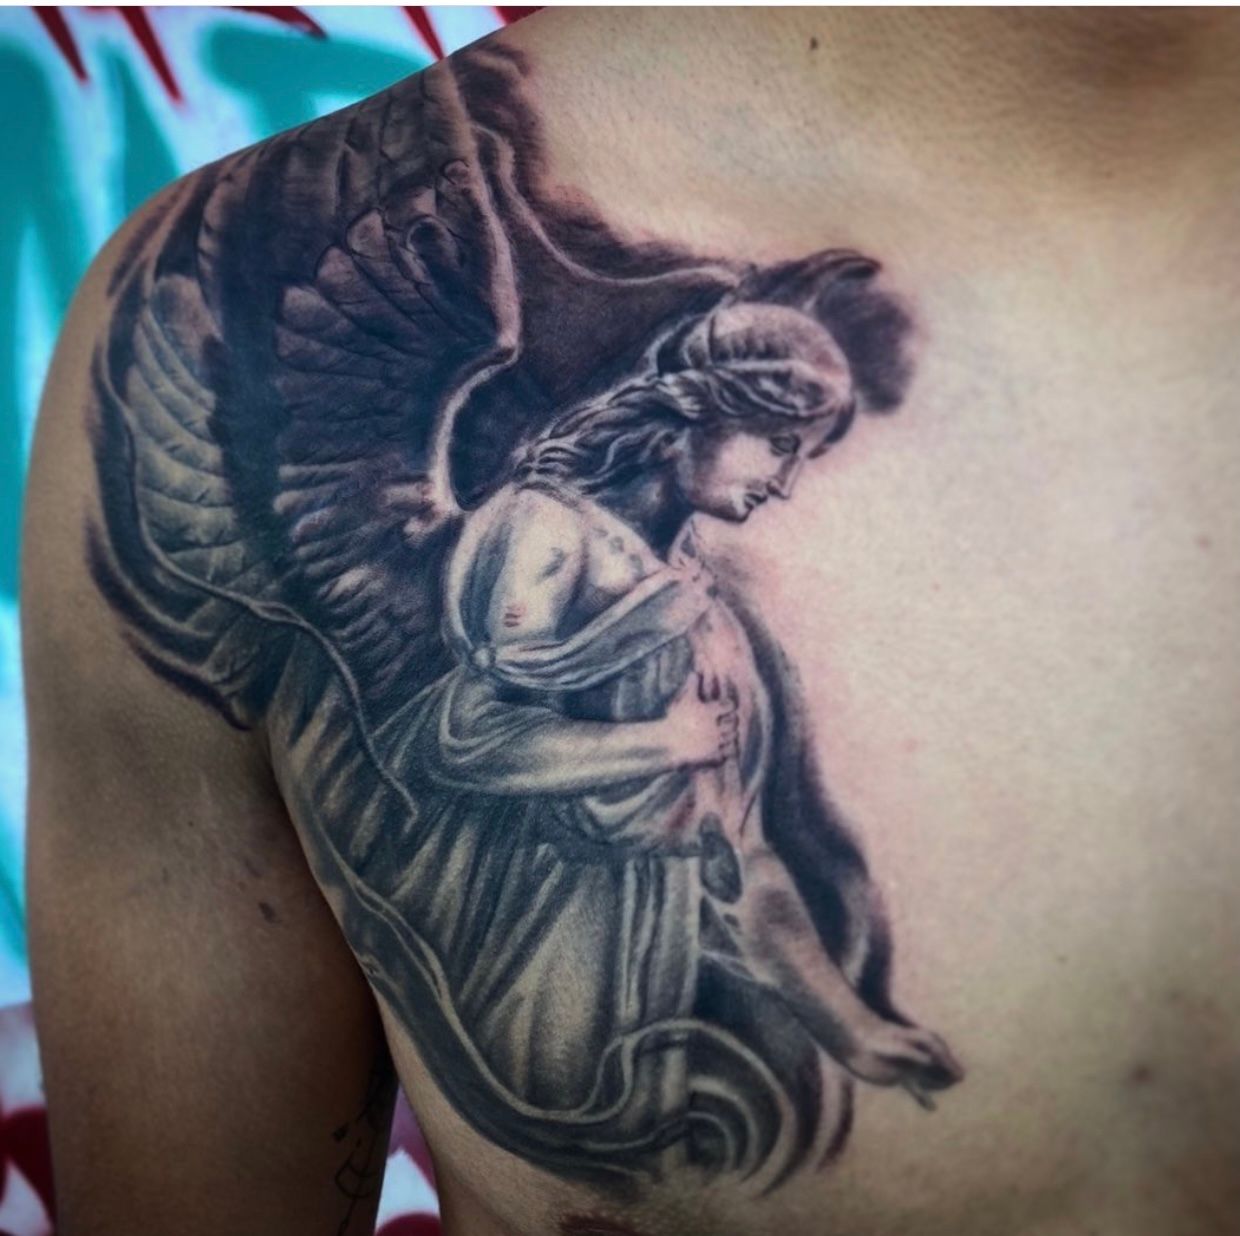 Warrior Angel Fighting With Sword Best Temporary Tattoos| WannaBeInk.com